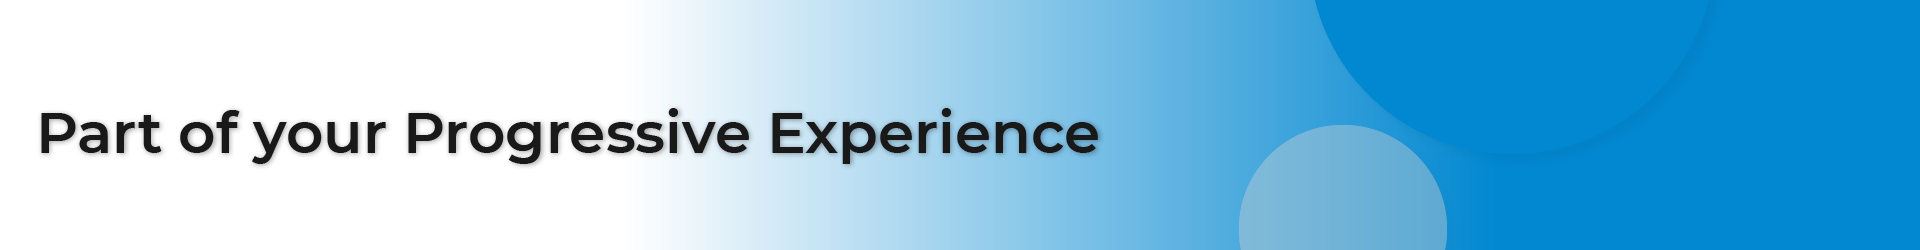 Progressive Experience Event Banner - Website